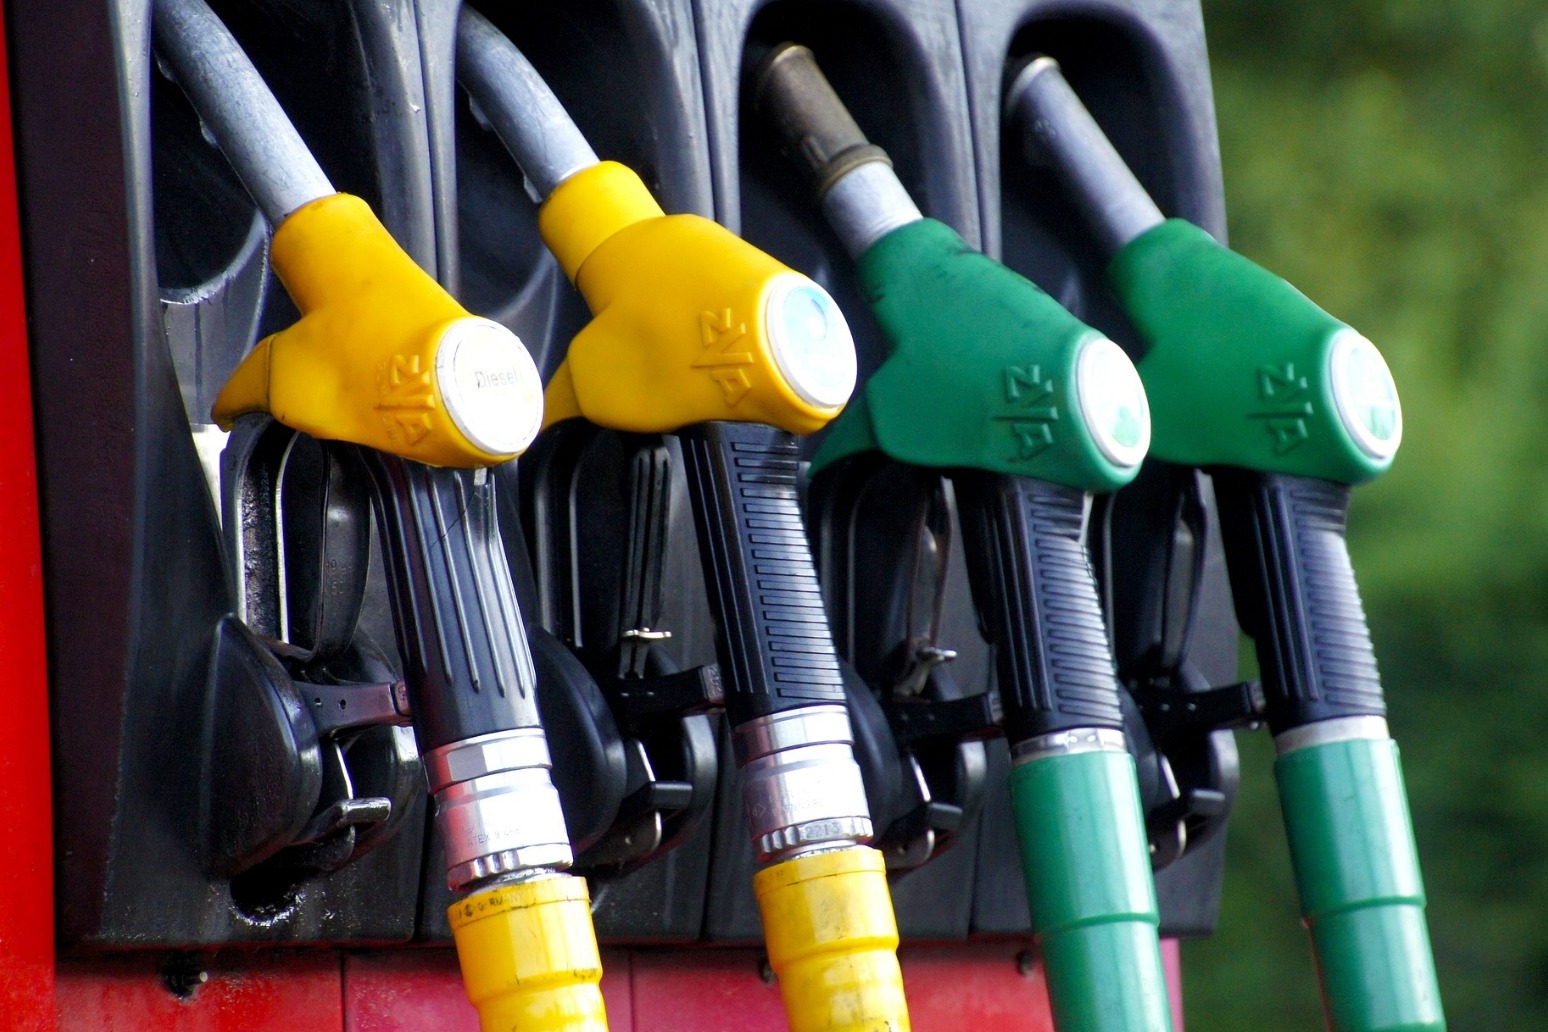 Fuel prices dip in June 